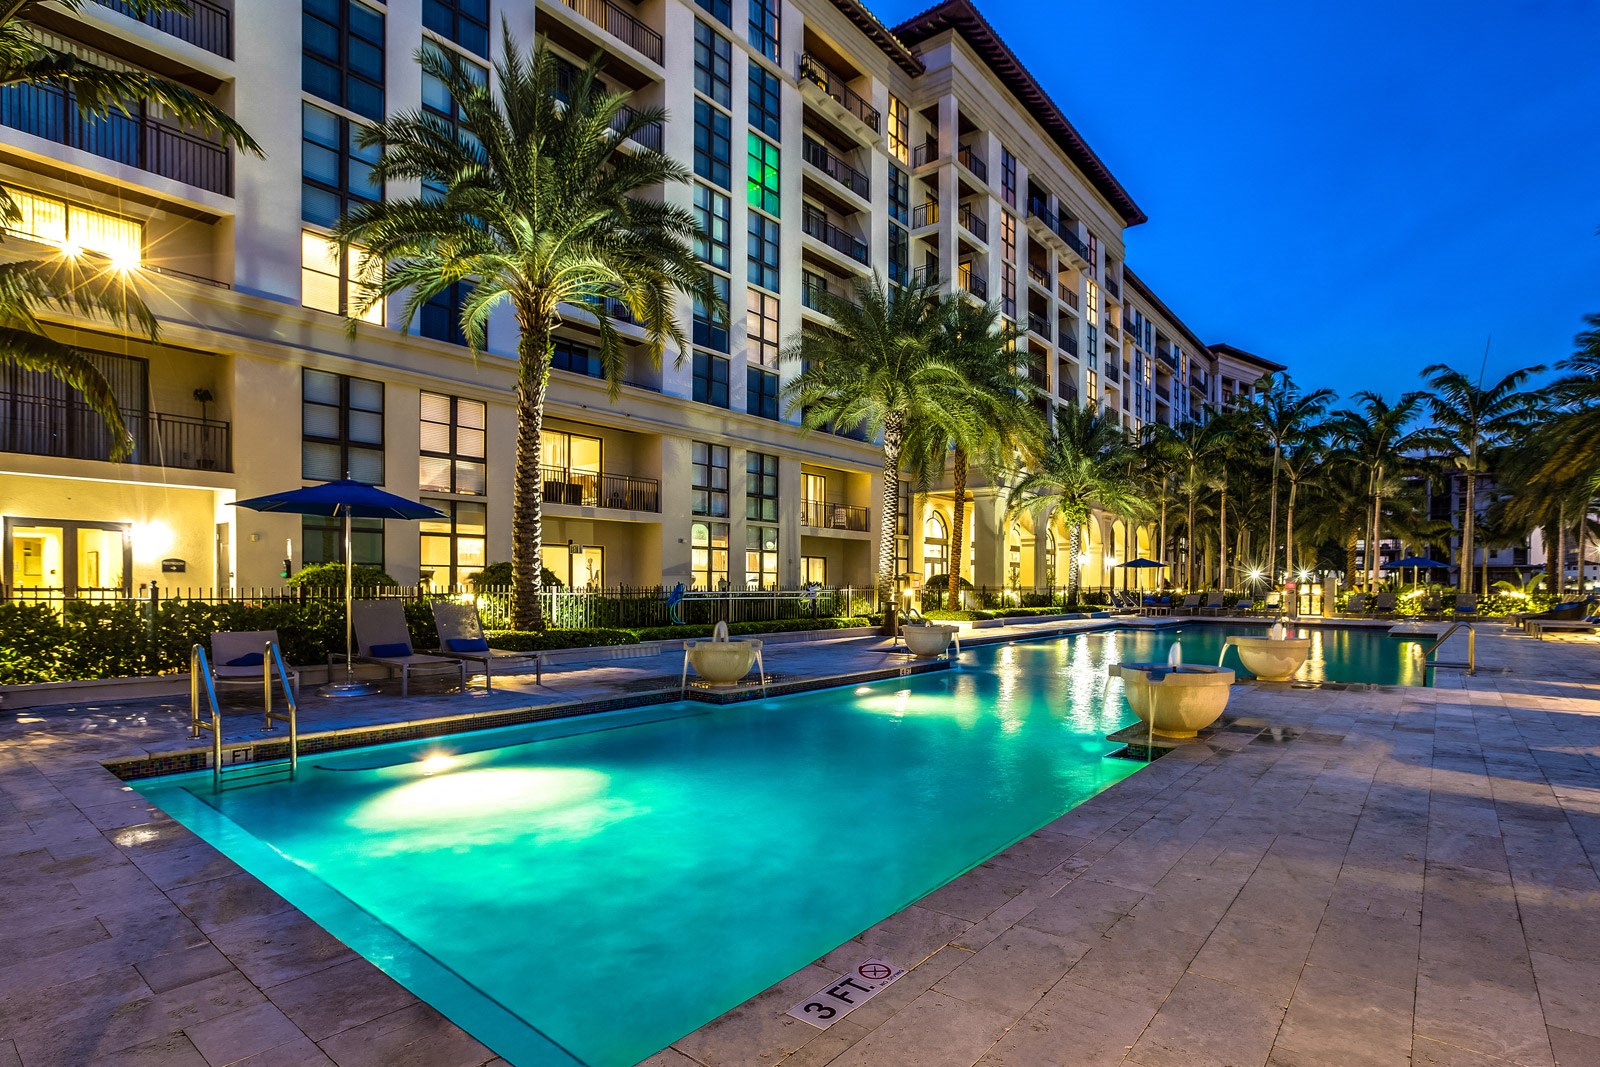 25 Best Luxury Apartments in Miami, FL (with photos) RENTCafé